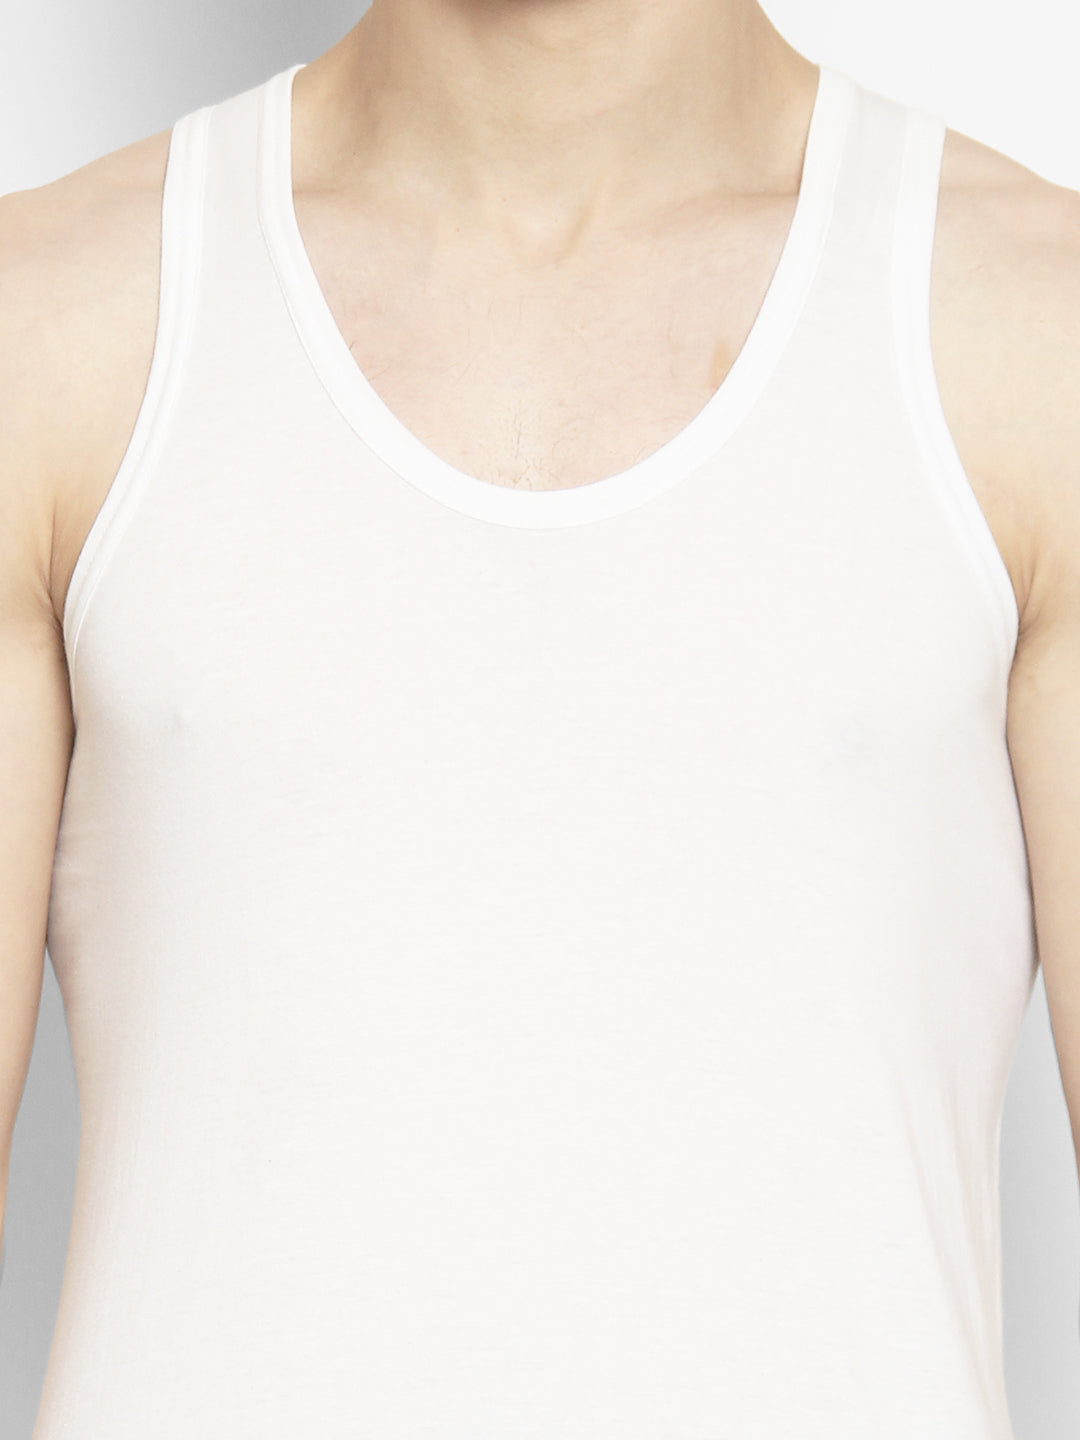 Men's Neva Koolin White Round Neck Sleeveless Sandow Vest - Cotton, Extra Soft, Creating Koolin Effect for Comfort - Ideal for Summer, Gym, and Everyday Wear- Pack of 6 Pcs